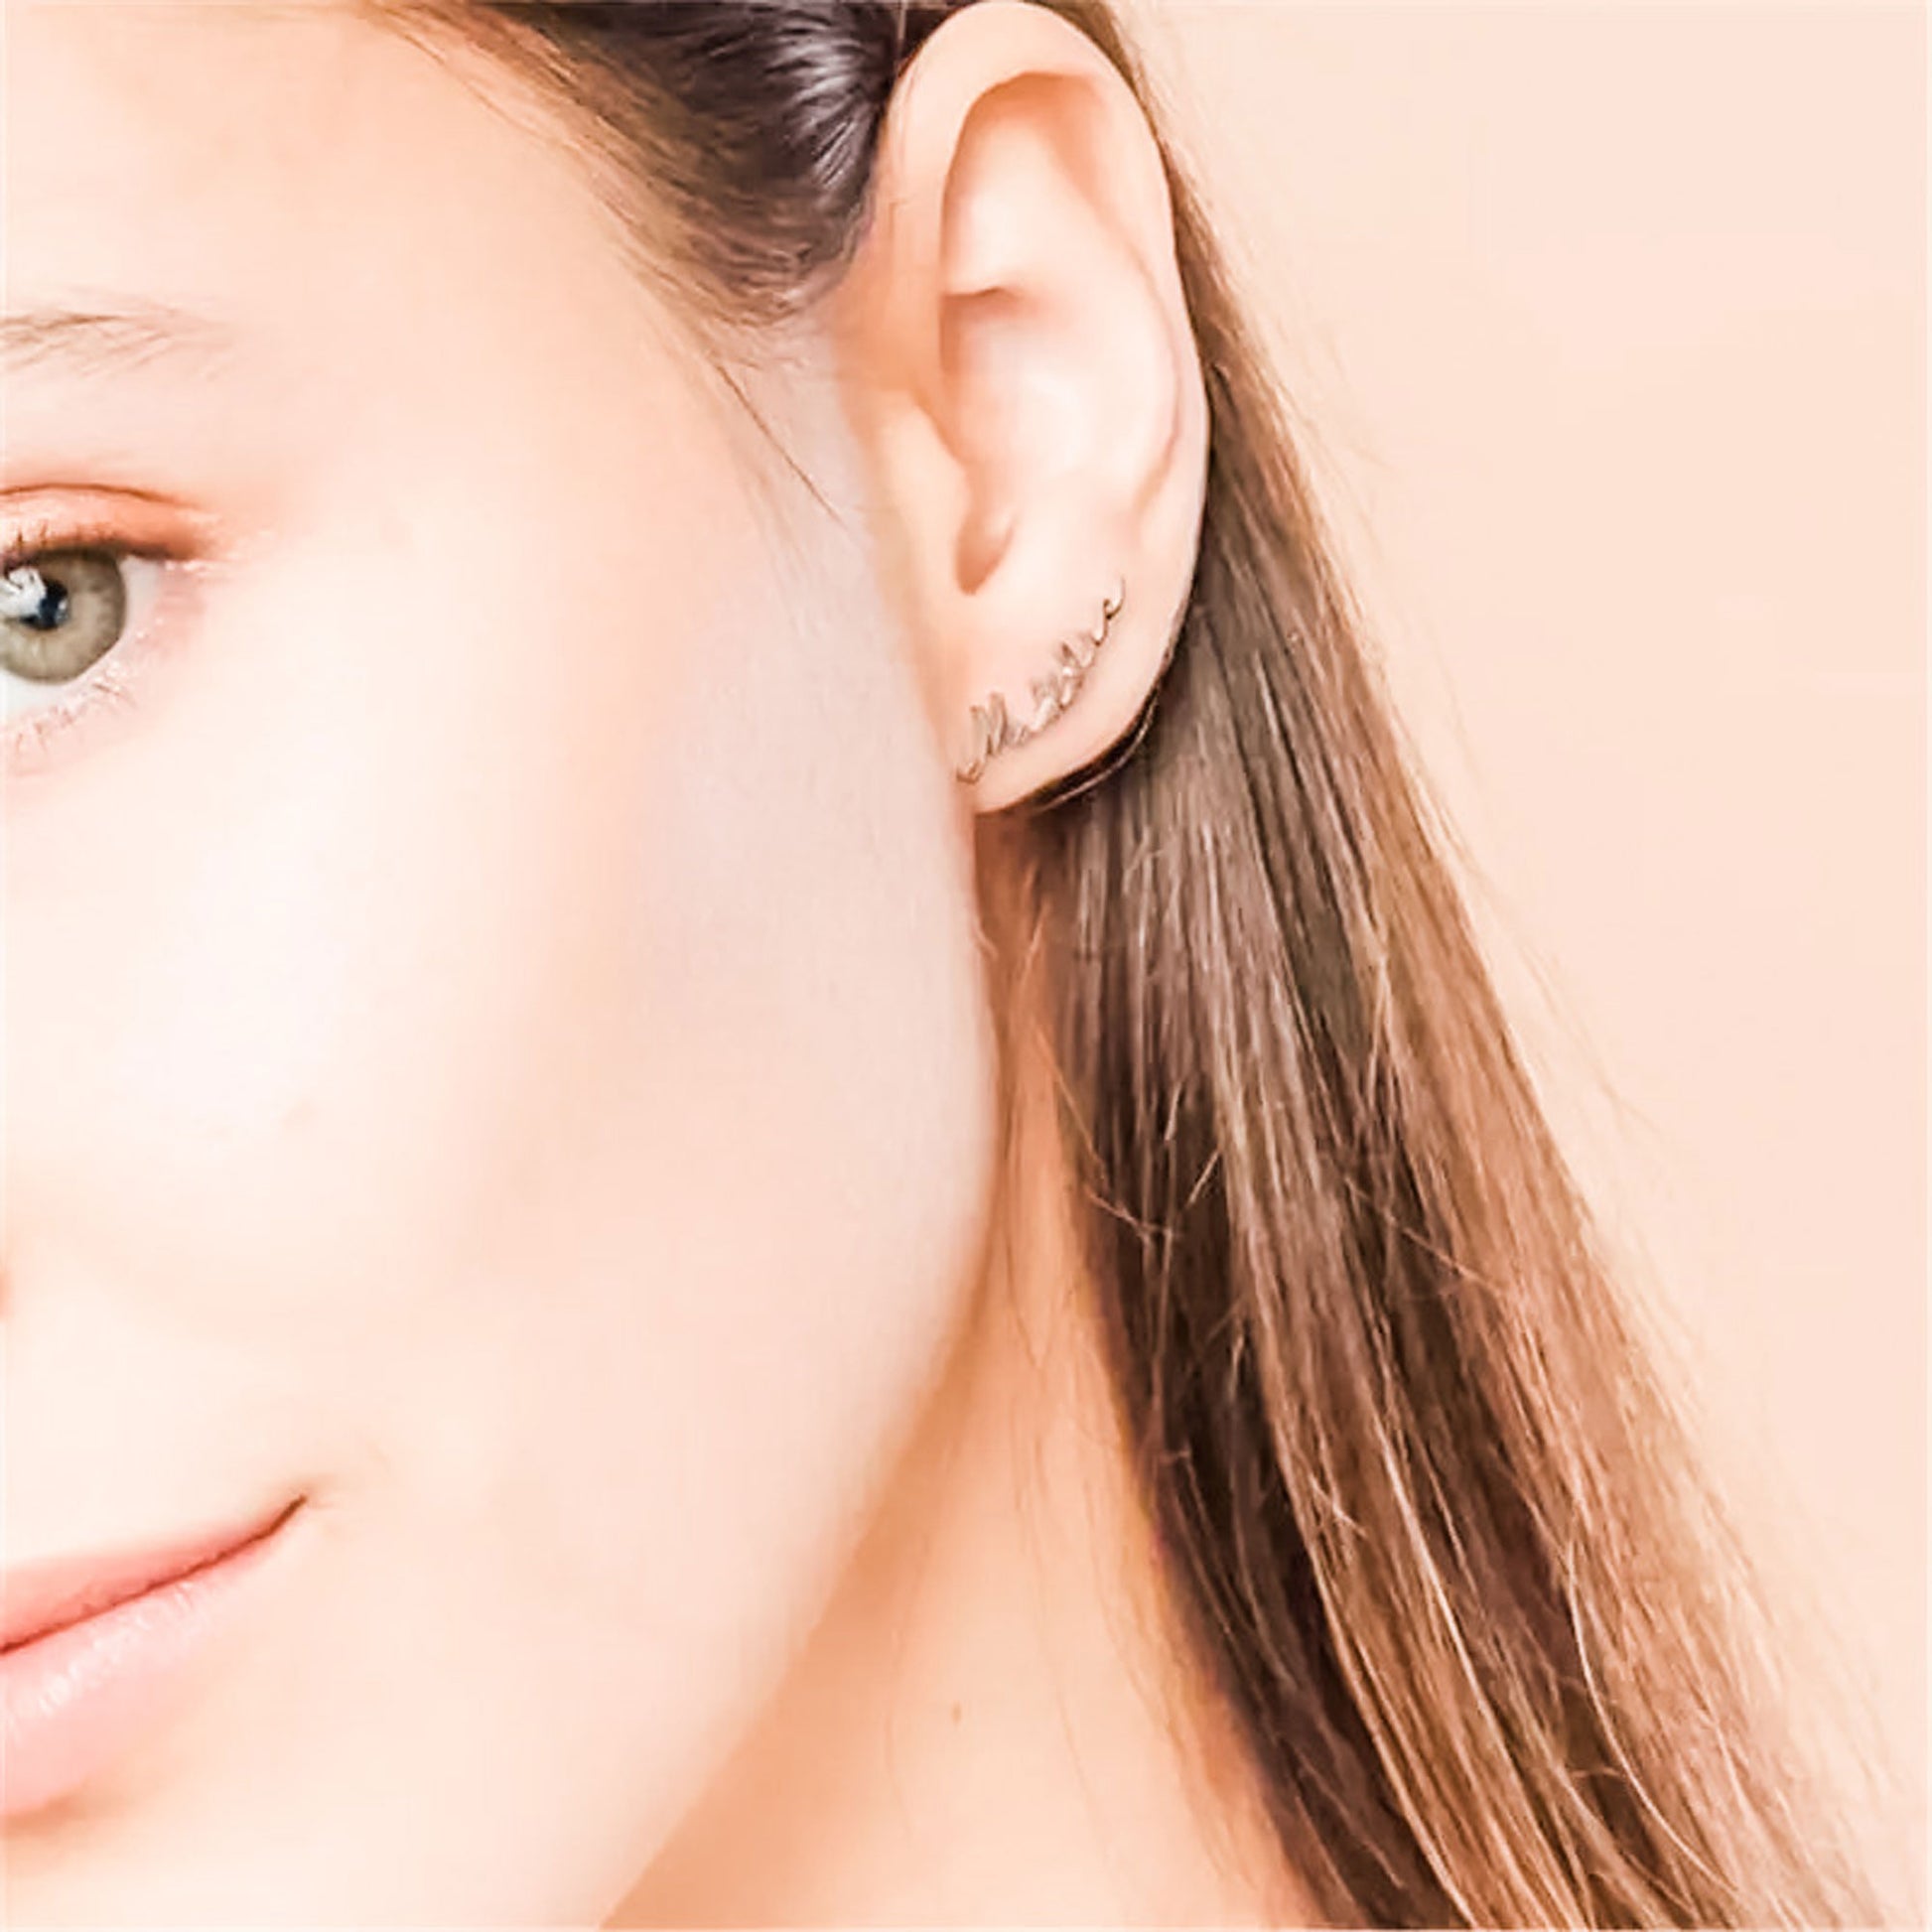 Image of Handwritten Custom Name Earrings featuring personalized earrings in rose gold